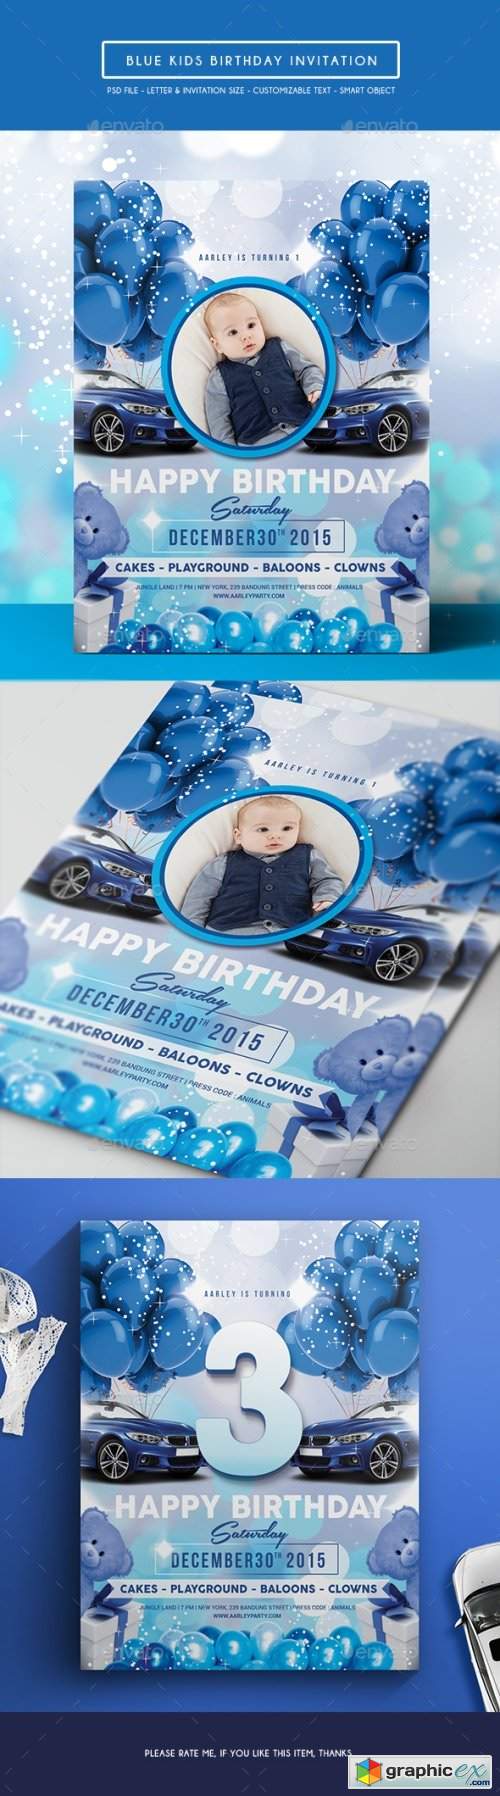 Blue Kids Birthday Invitation